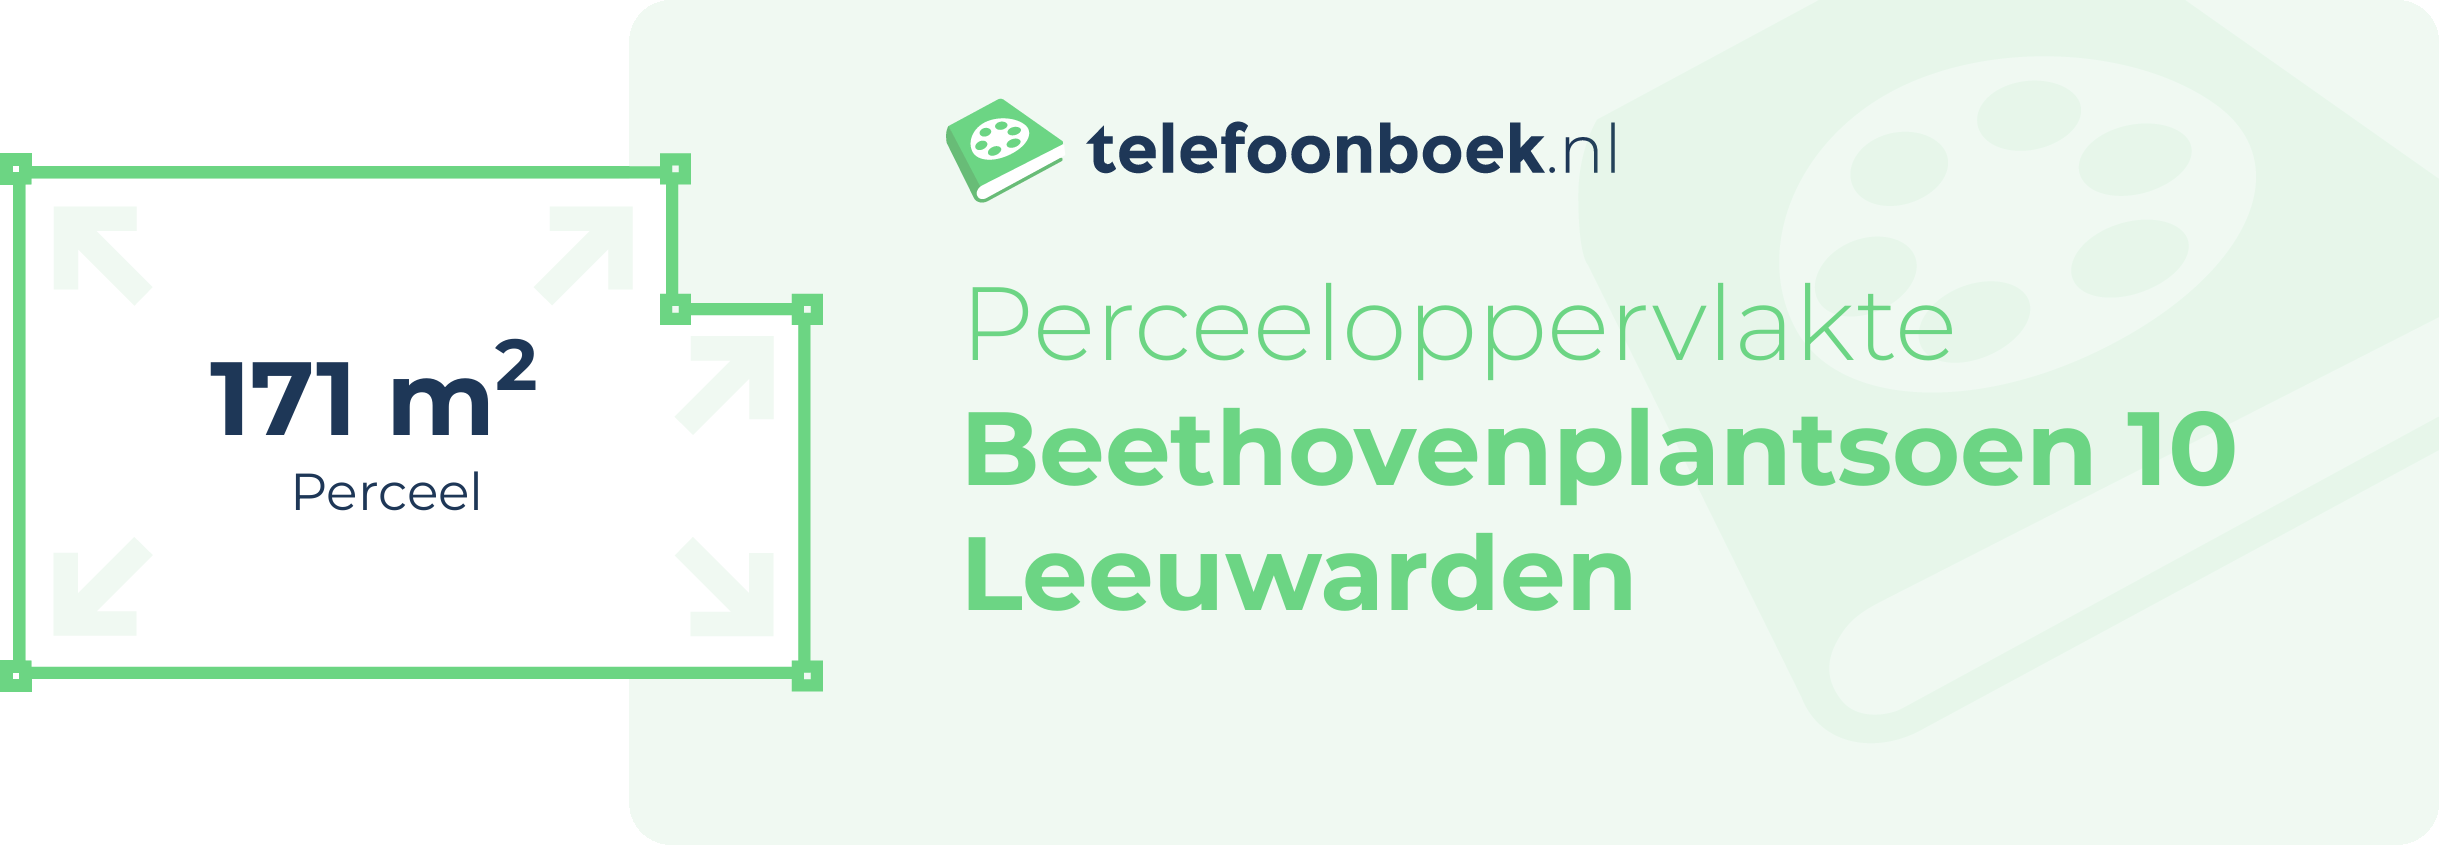 Perceeloppervlakte Beethovenplantsoen 10 Leeuwarden